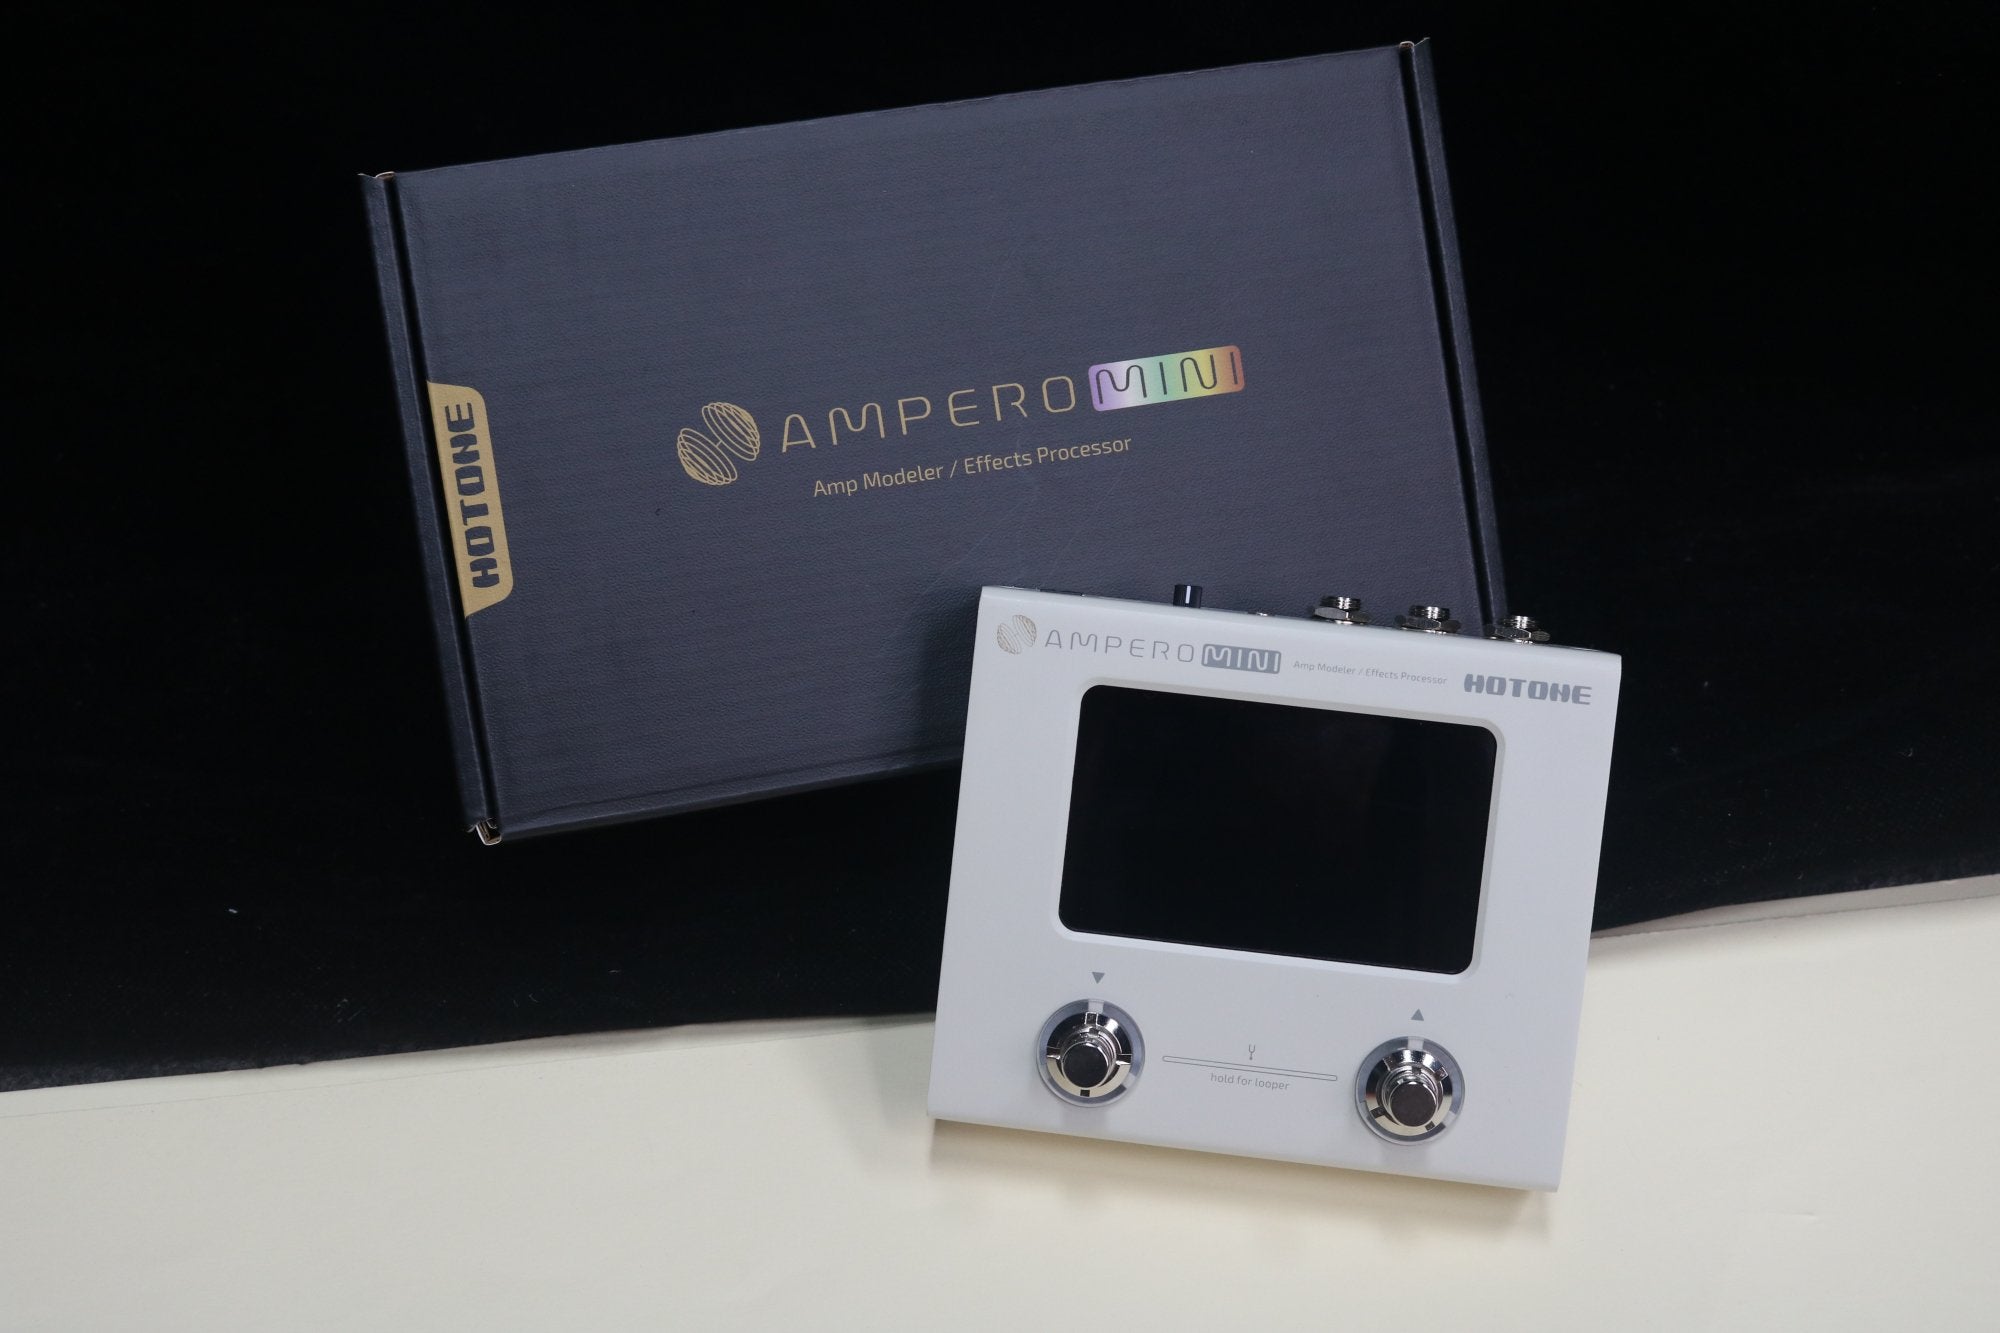 Ampero Mini Amp Modeler/Effects Processor Vanilla